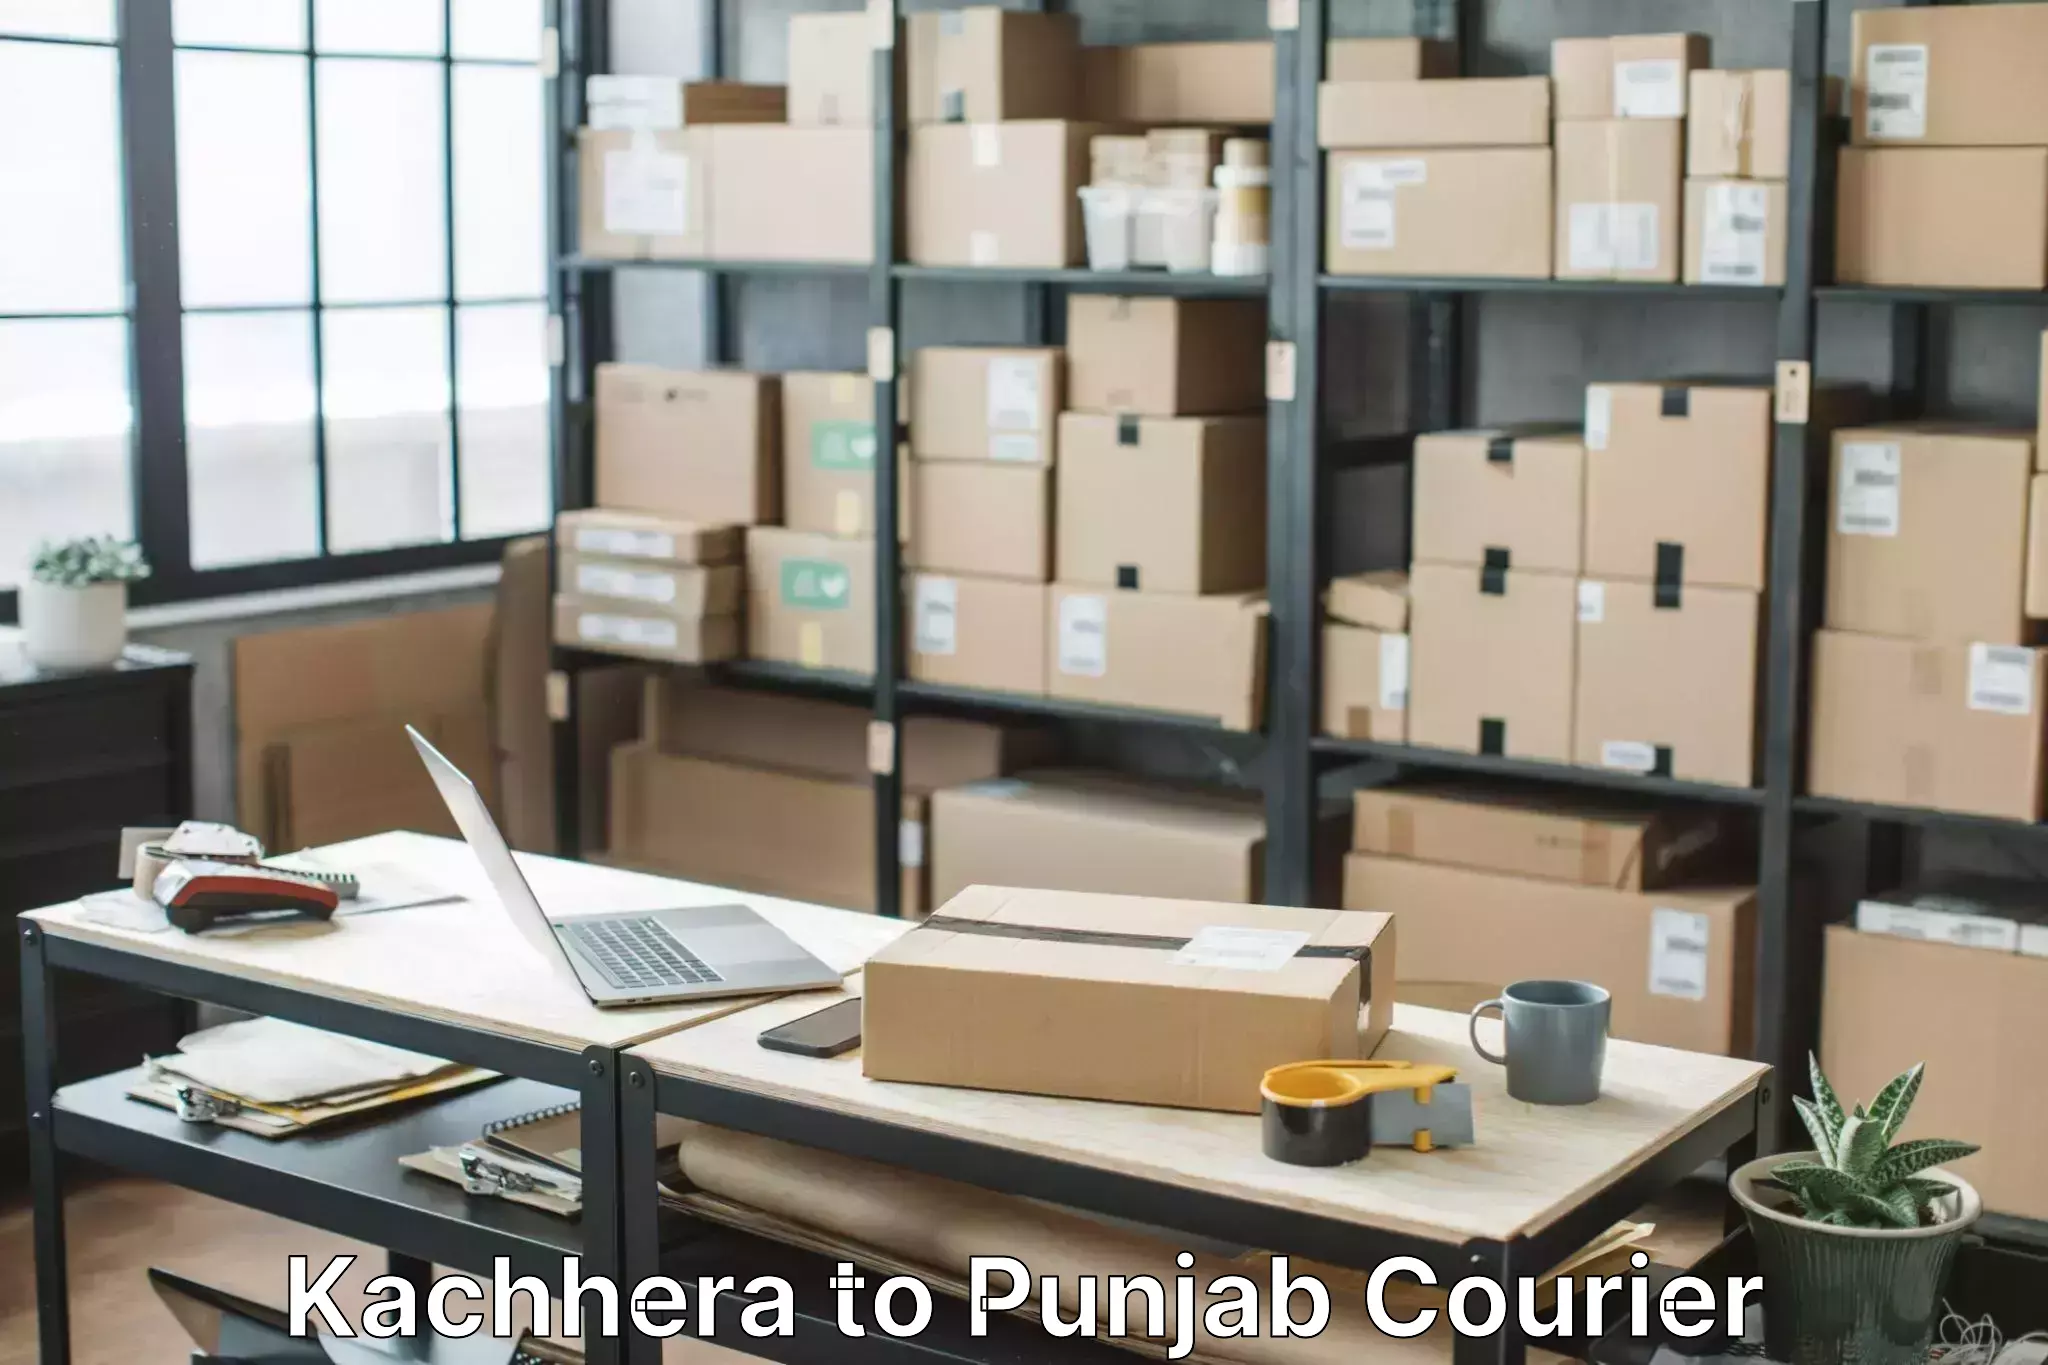 Professional moving company Kachhera to Zirakpur